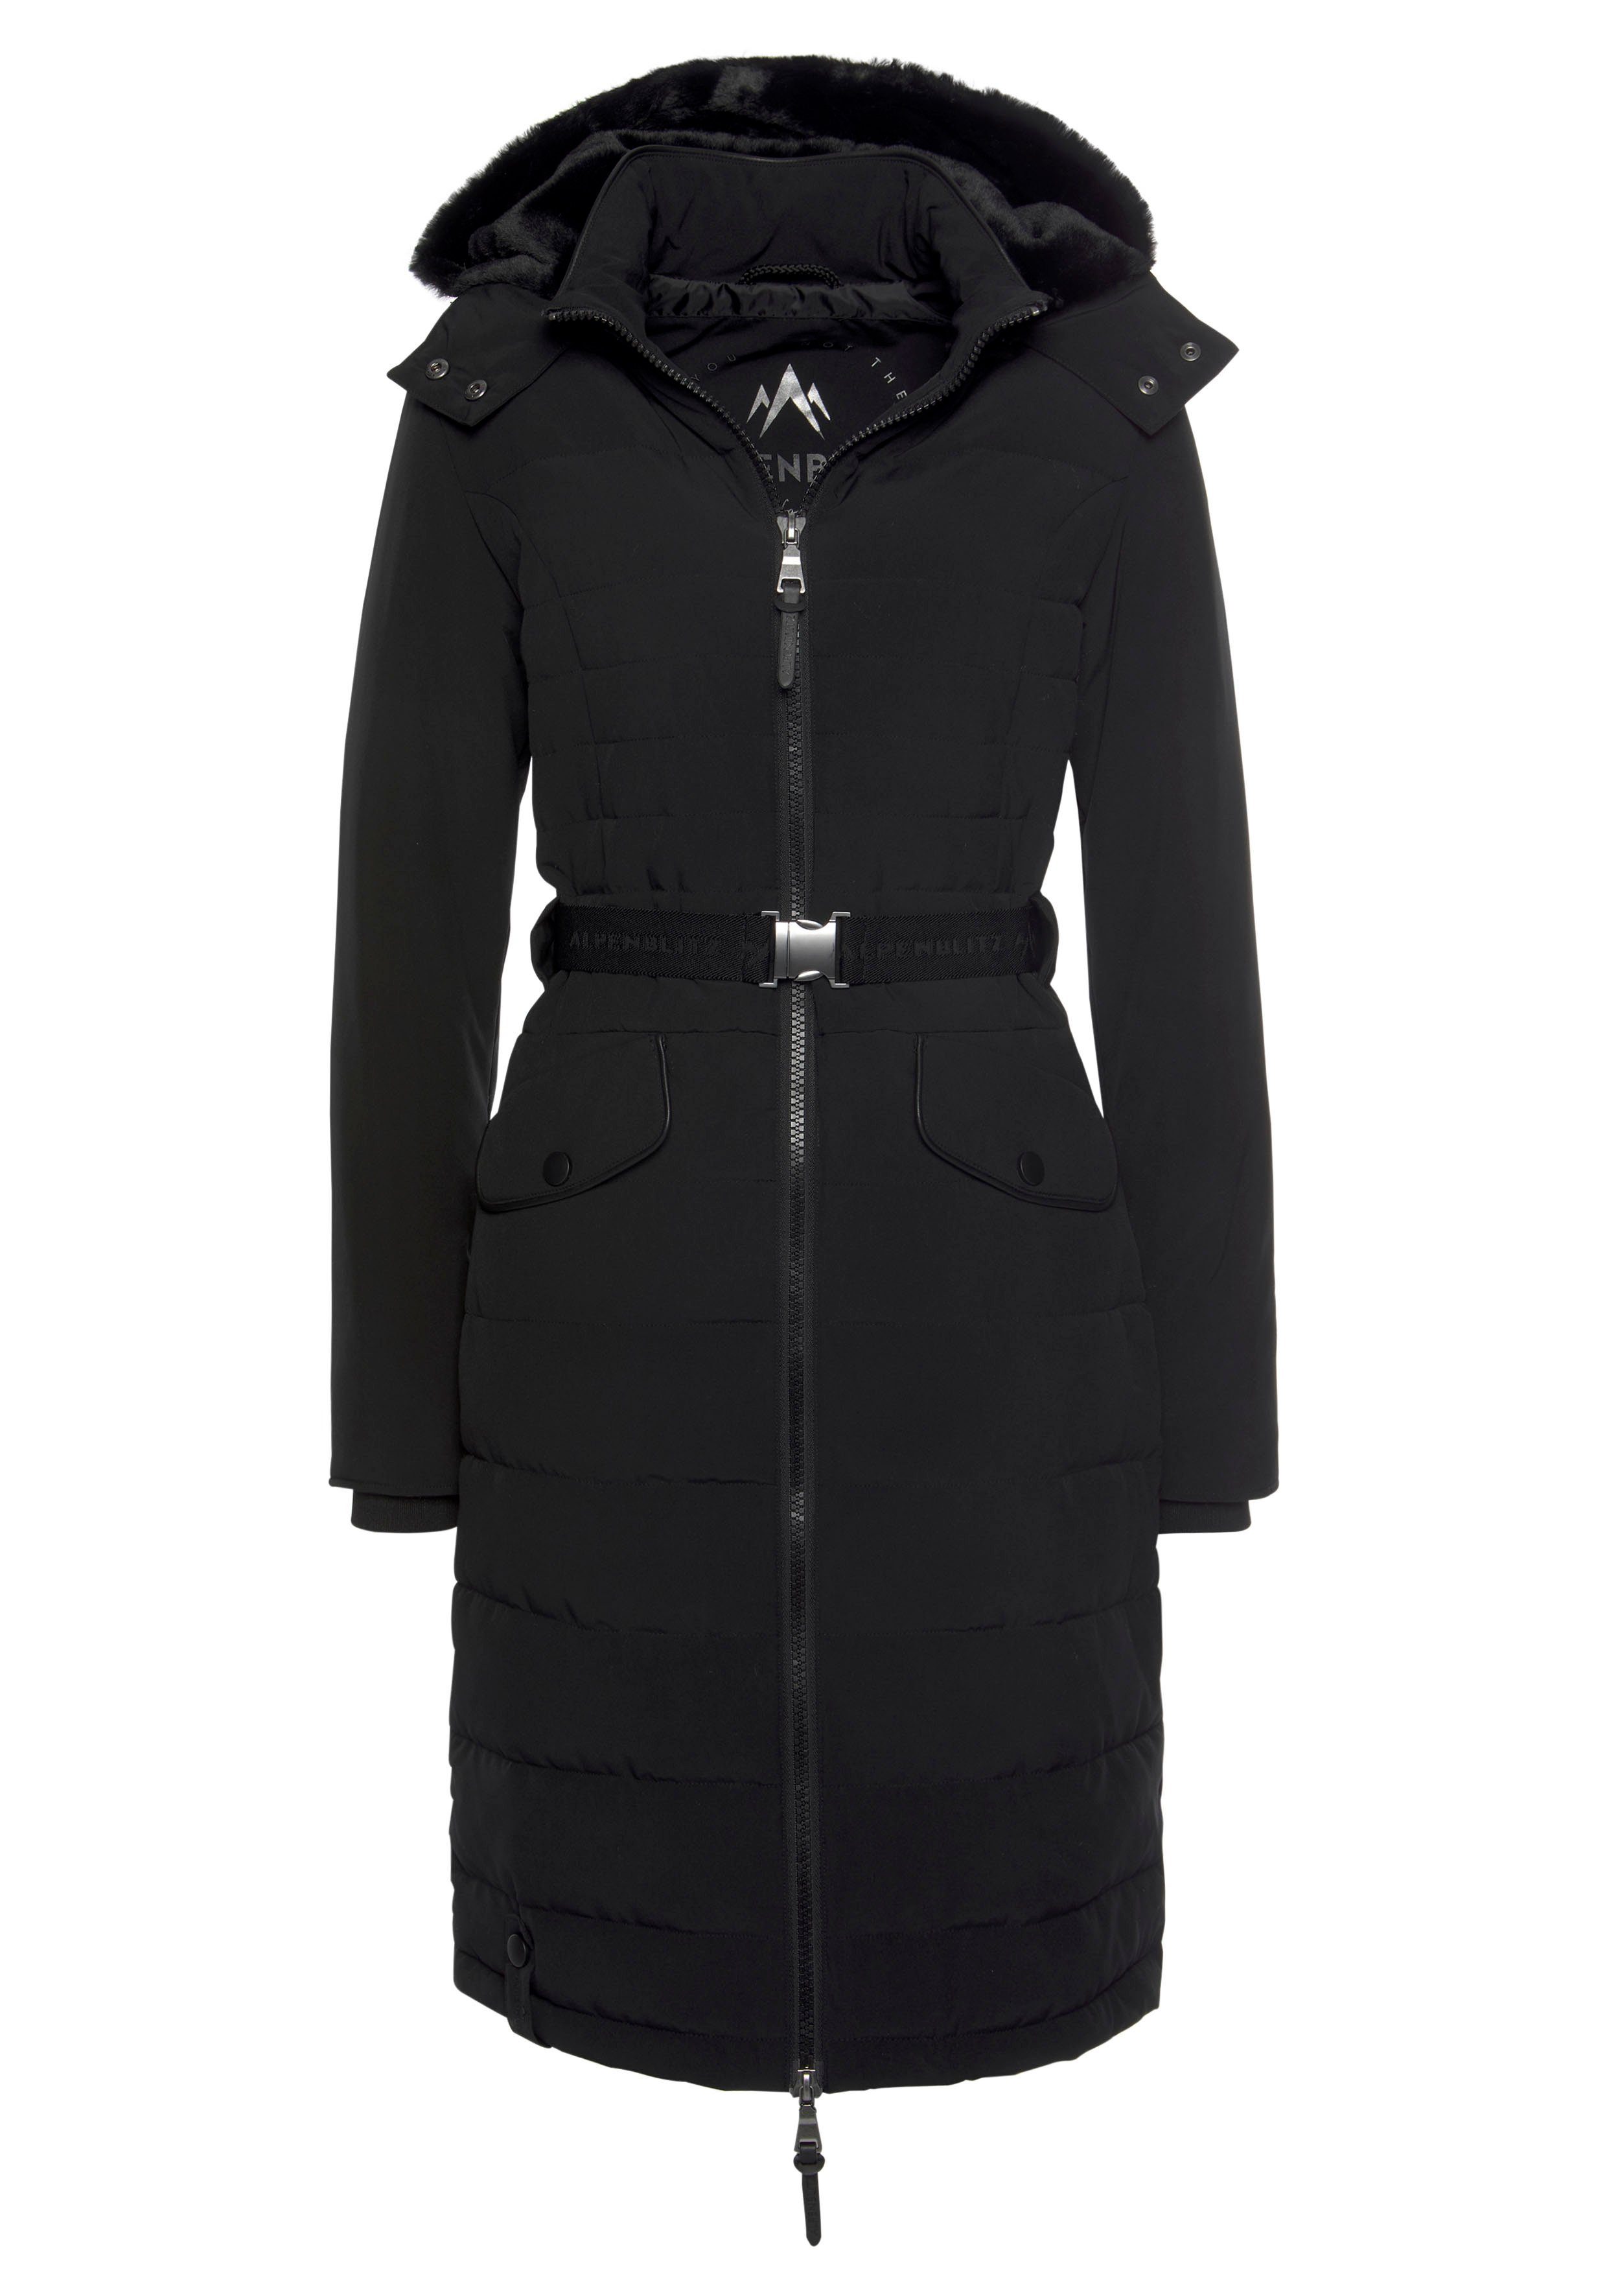 (Jacke Gürtel Mantel nachhaltigem auf Kuschel-Kapuze aus ALPENBLITZ abnehmbarer Steppmantel Oslo dem Material) black & mit Markenprägung long